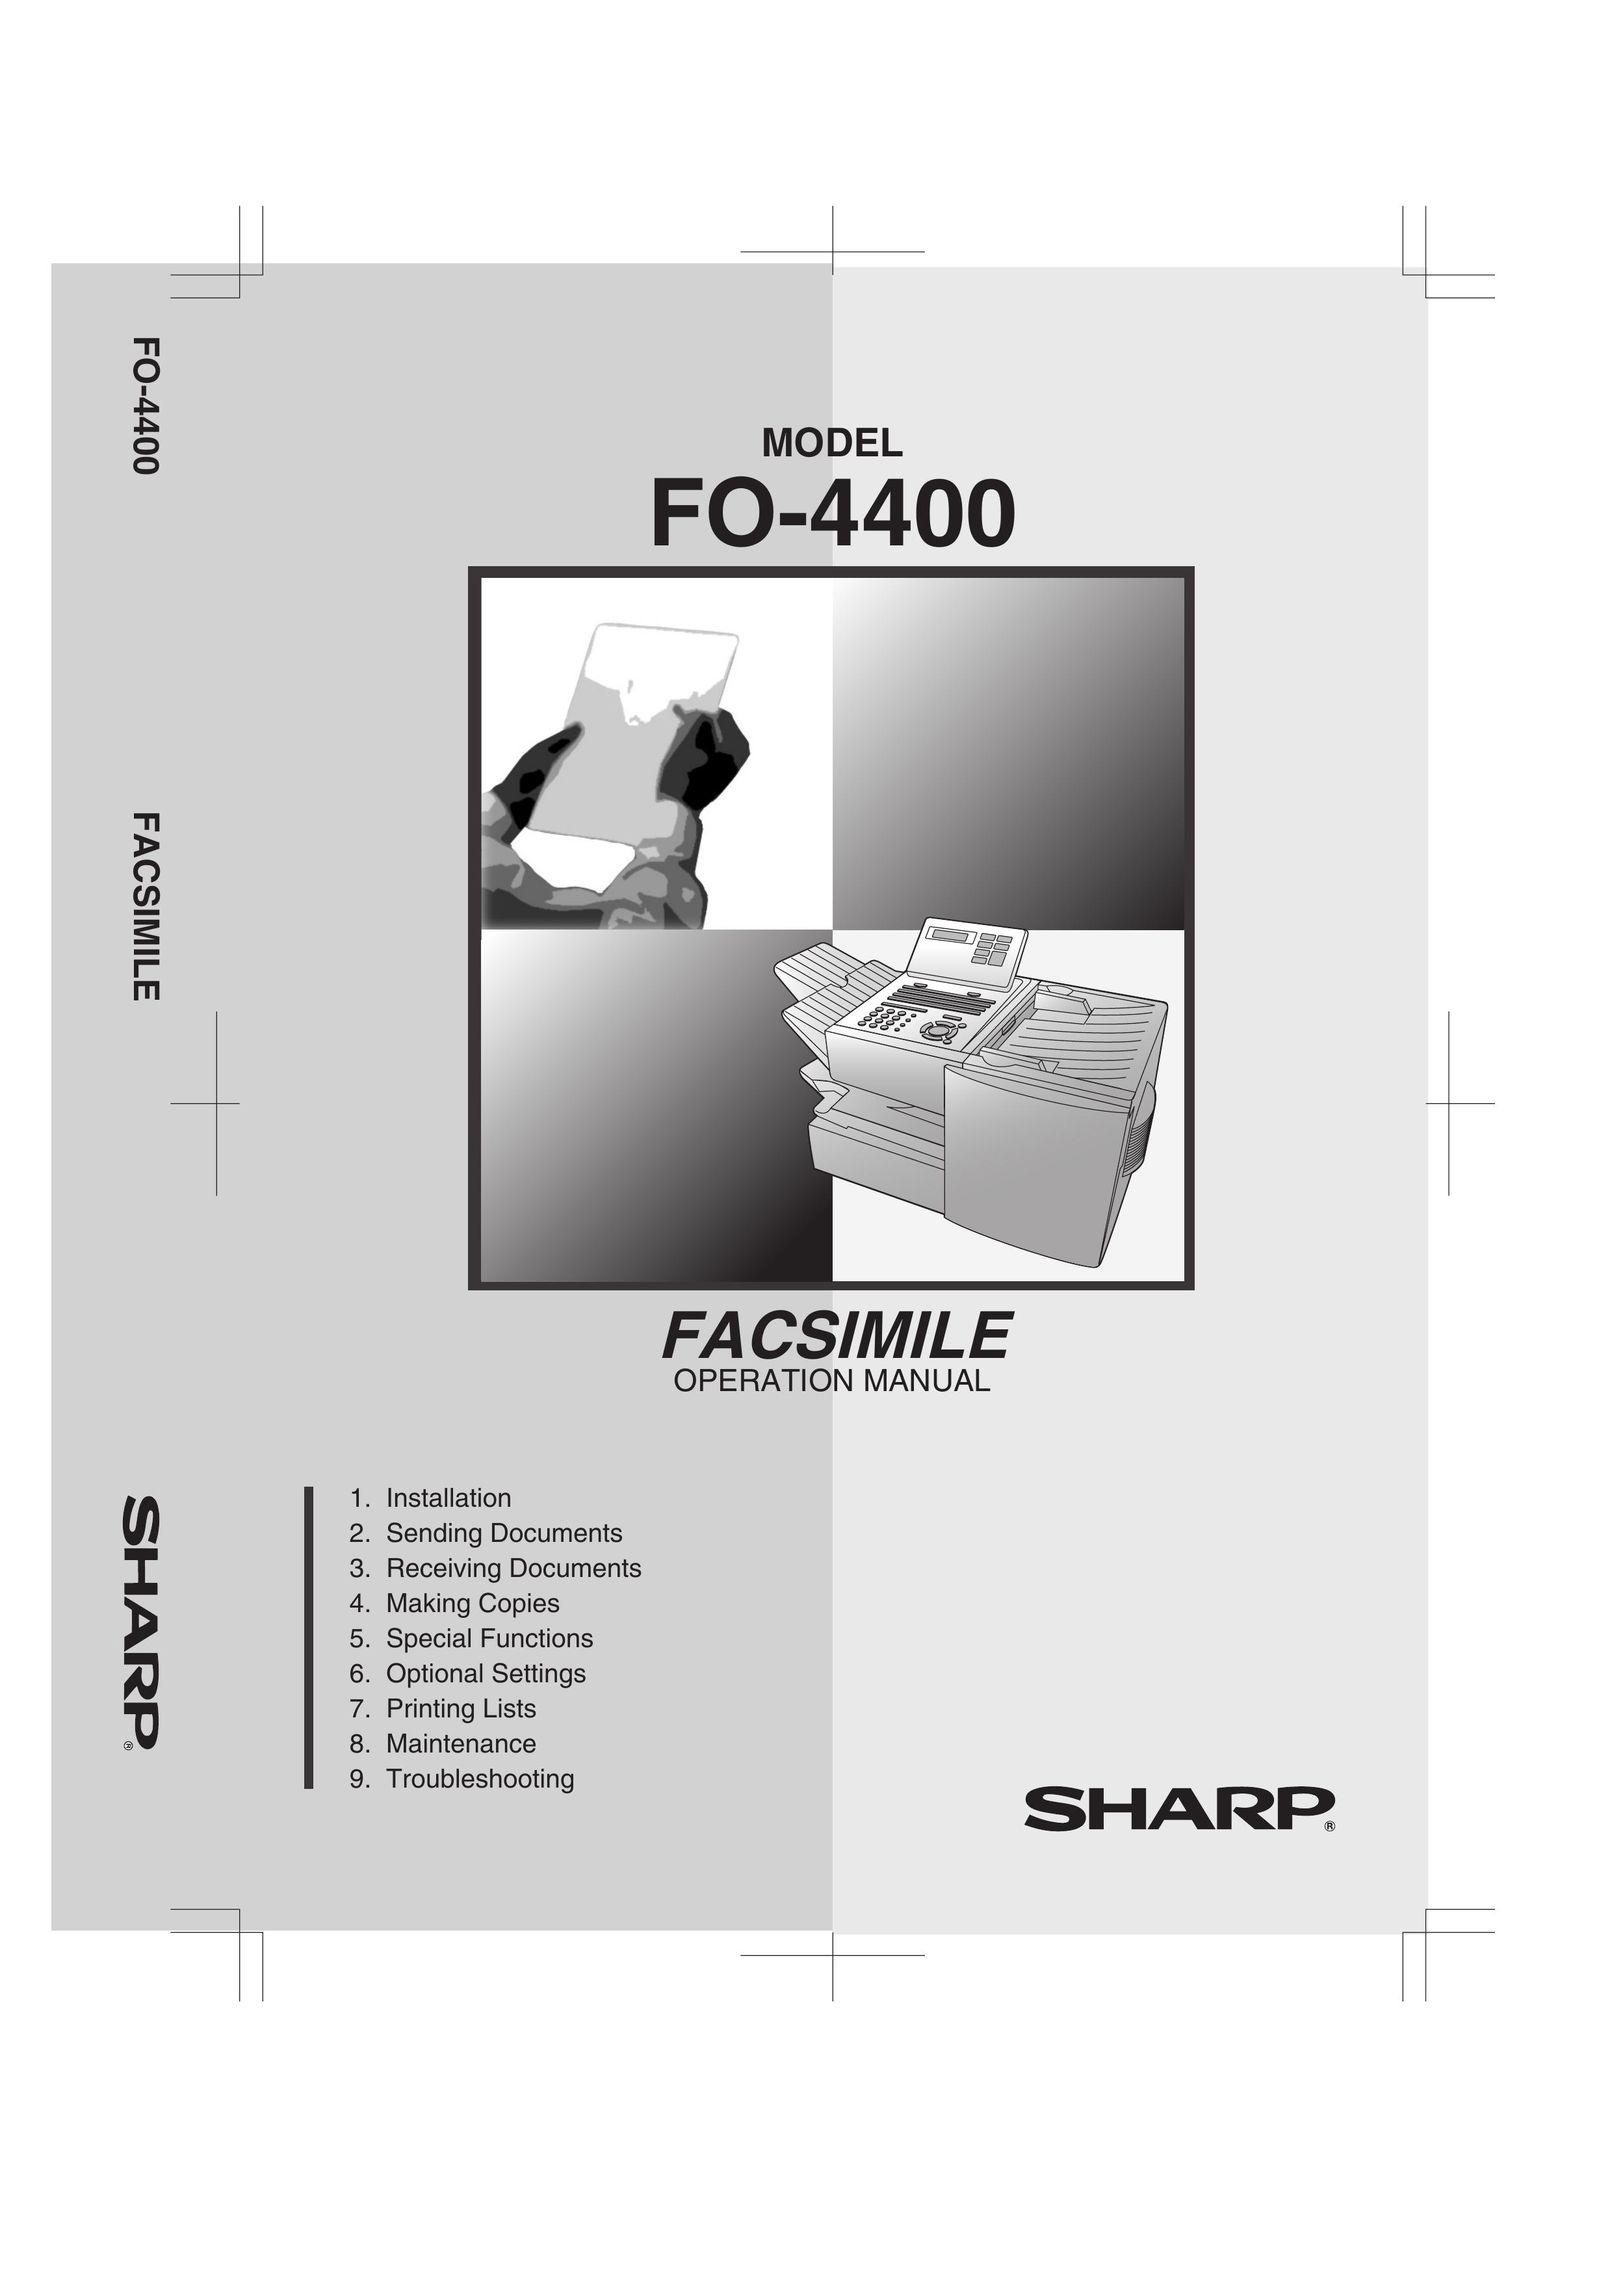 Sharp FO-4400 Fax Machine User Manual